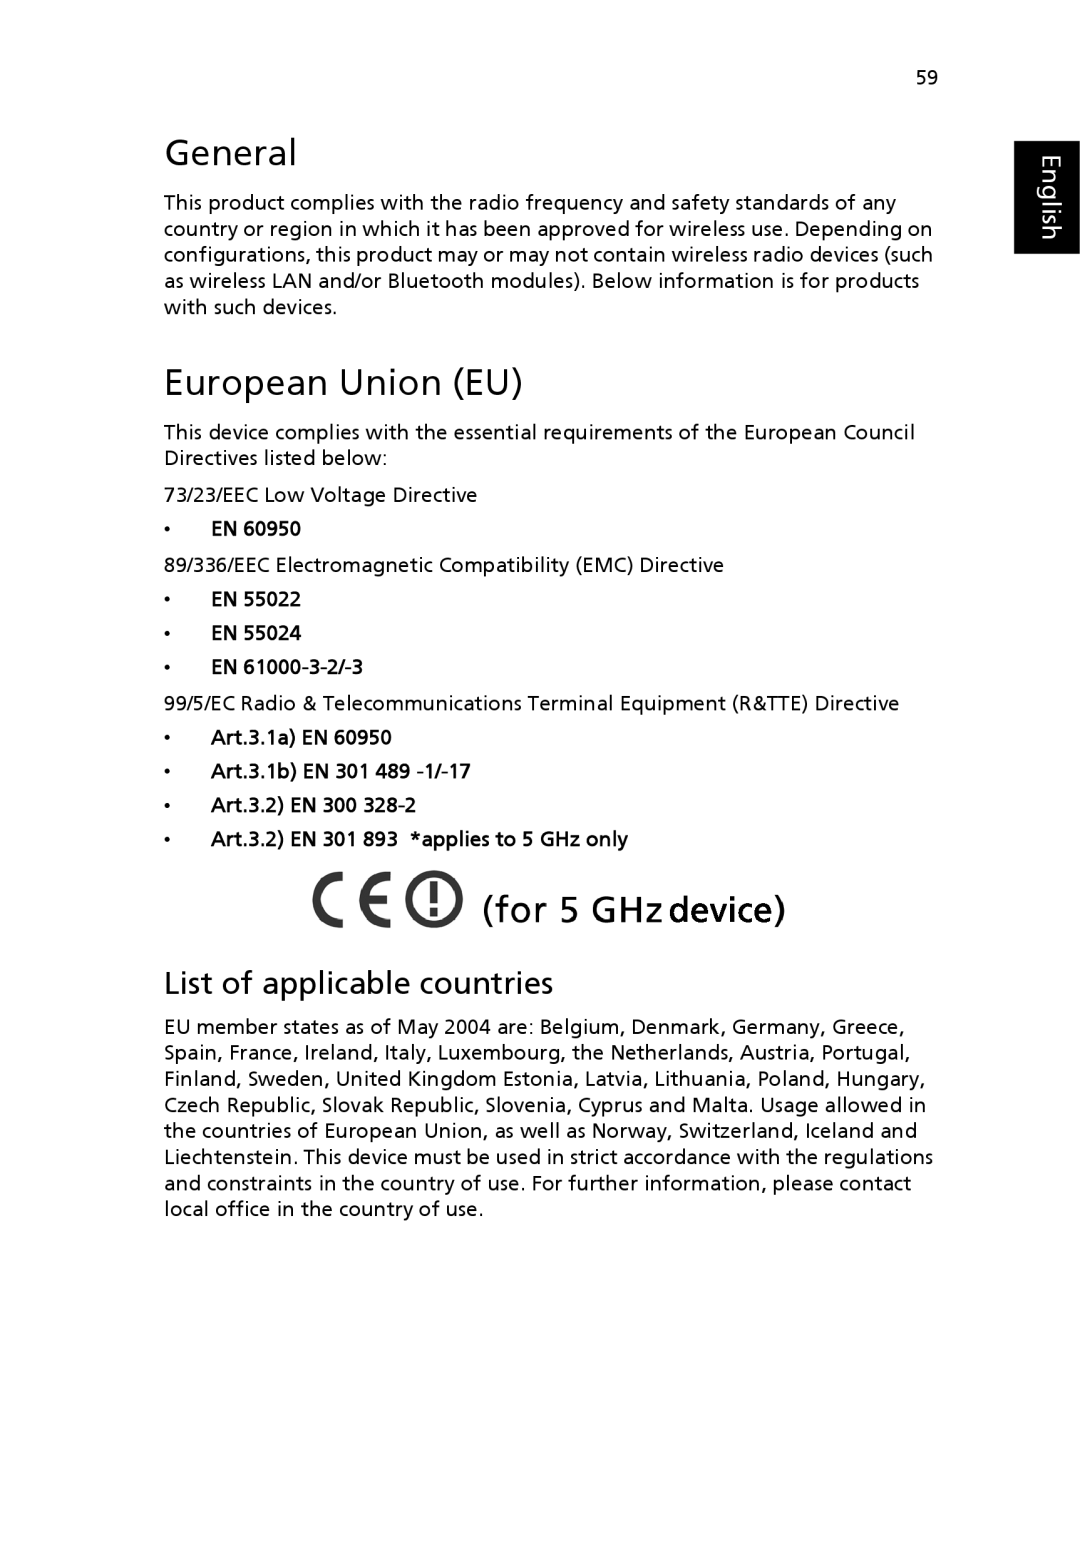 Acer 3610 Series manual General, European Union EU, EN 61000-3-2/-3 